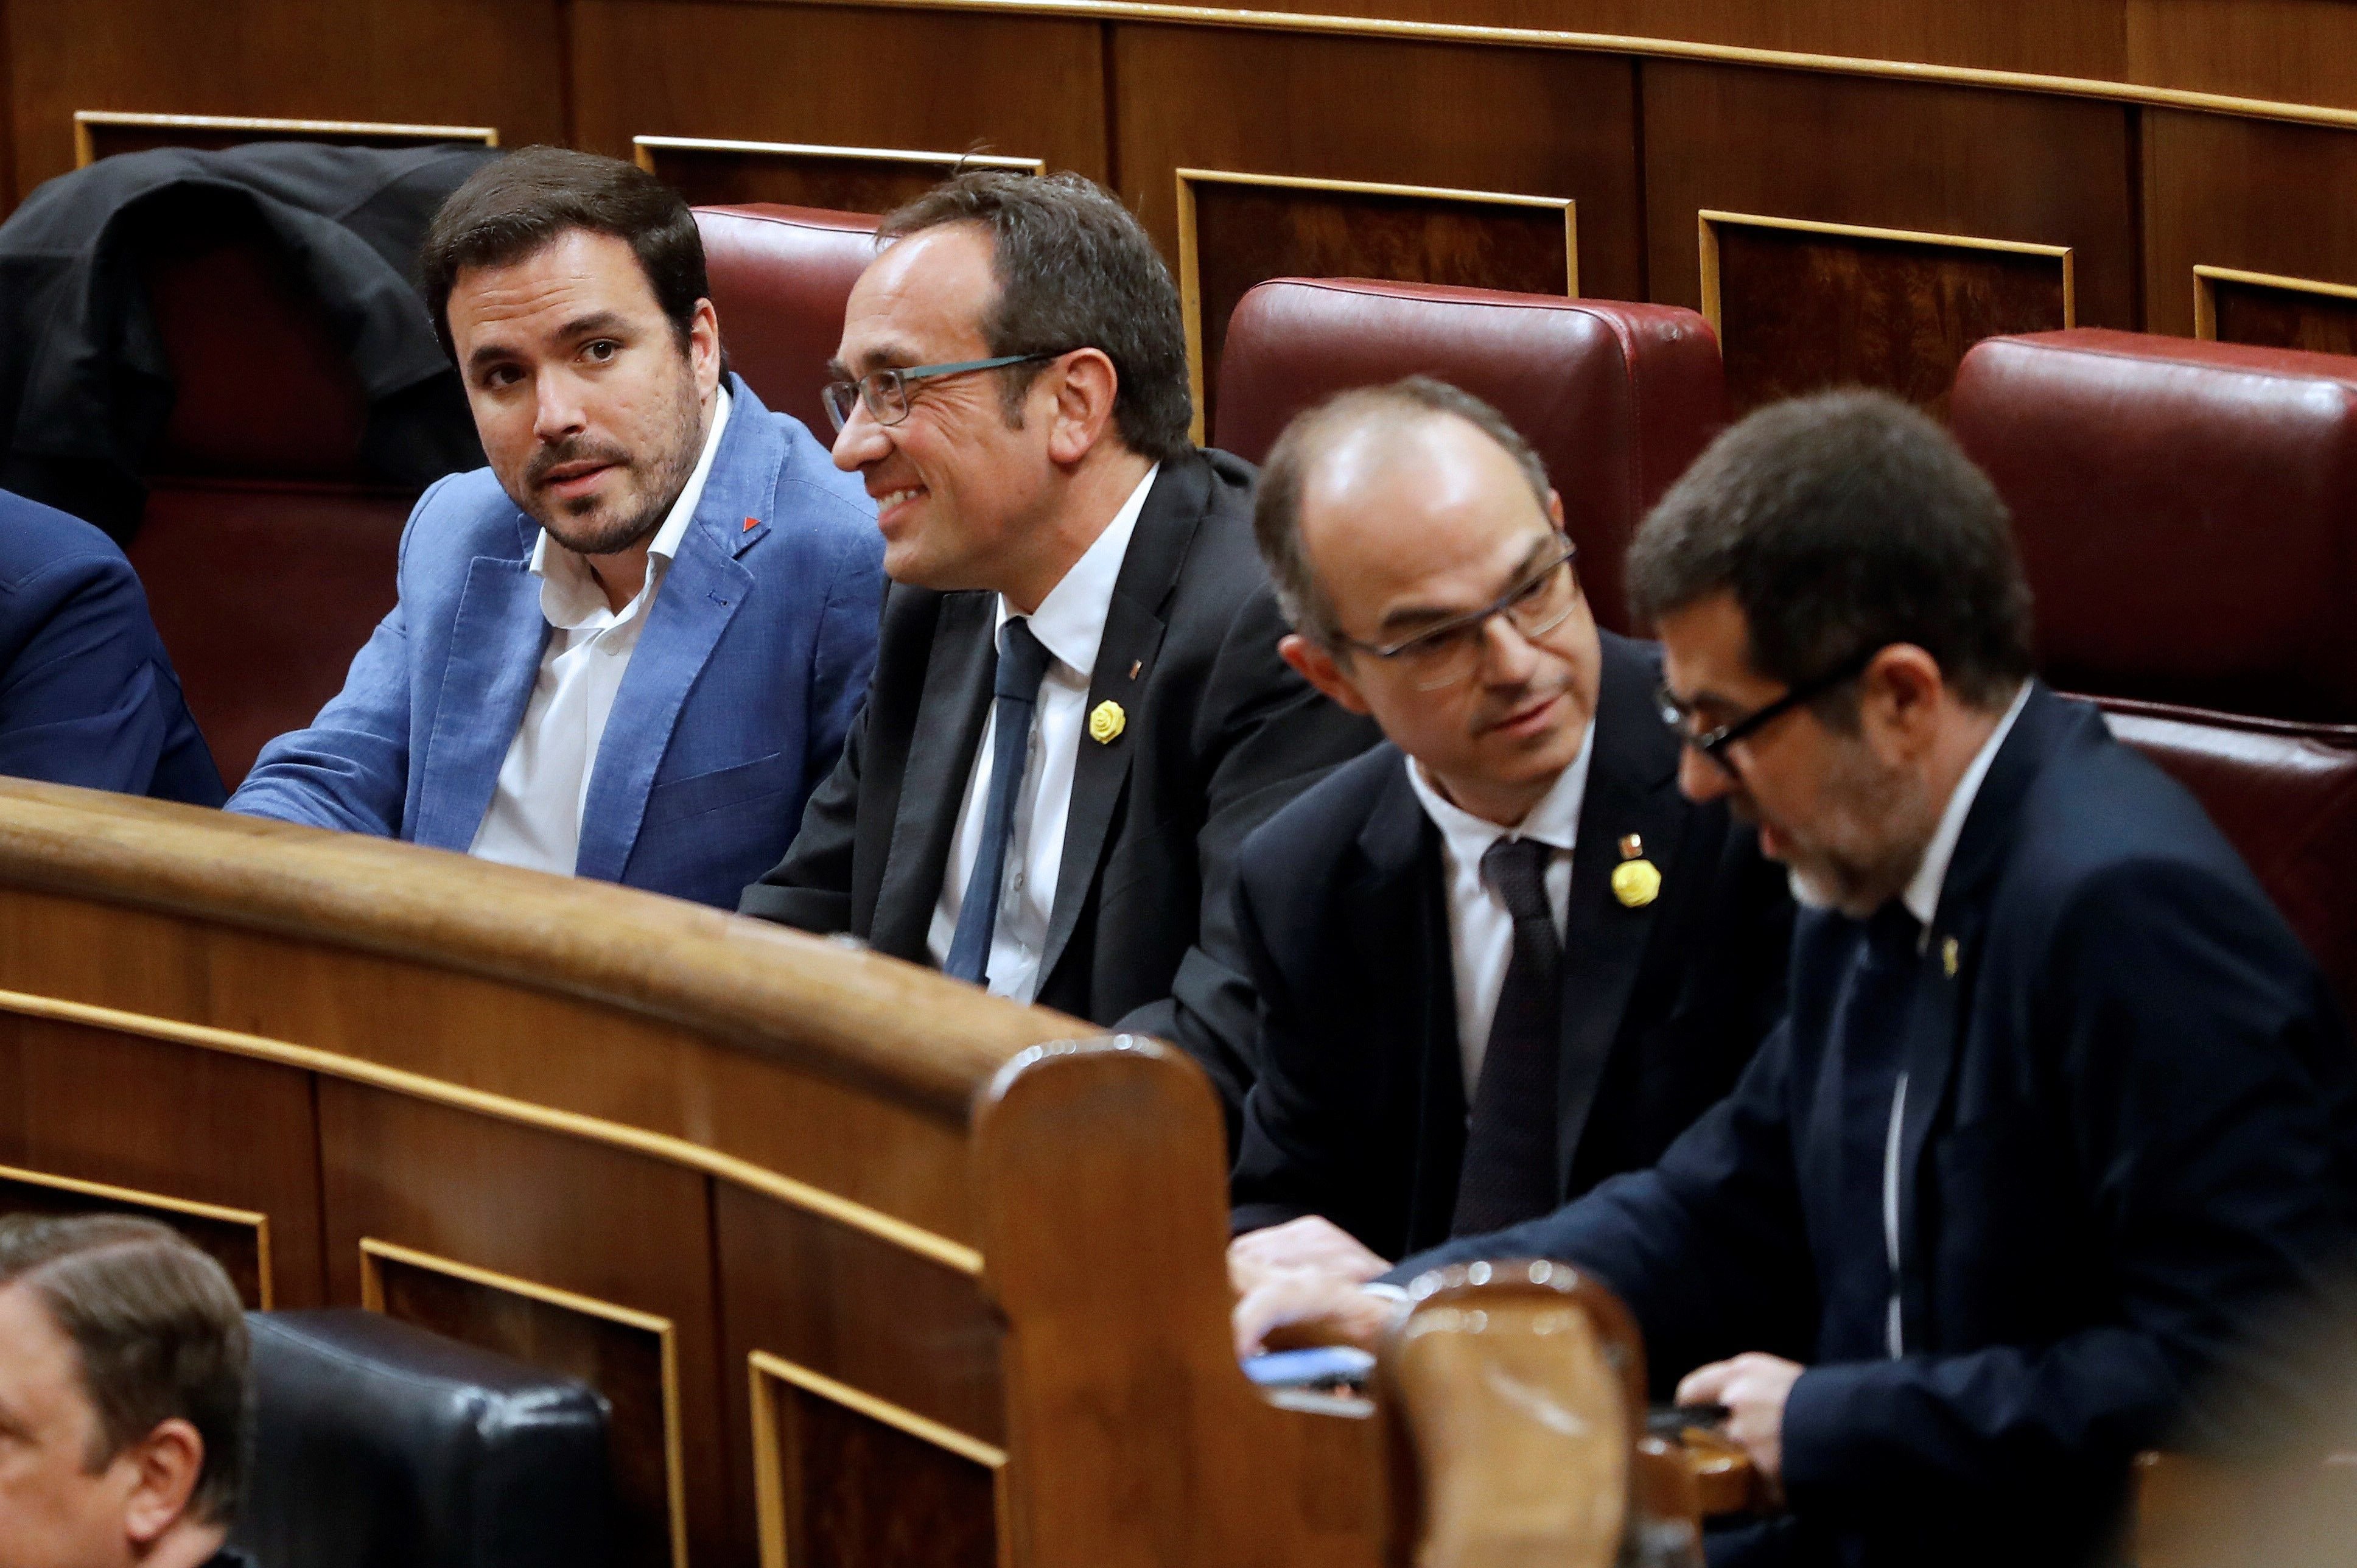 Catalan political prisoner MPs Josep Rull, Jordi Turull and Jordi Sànchez in the Spanish Congress, seated alongside Alberto Garzón of Unidas Podemos (left).